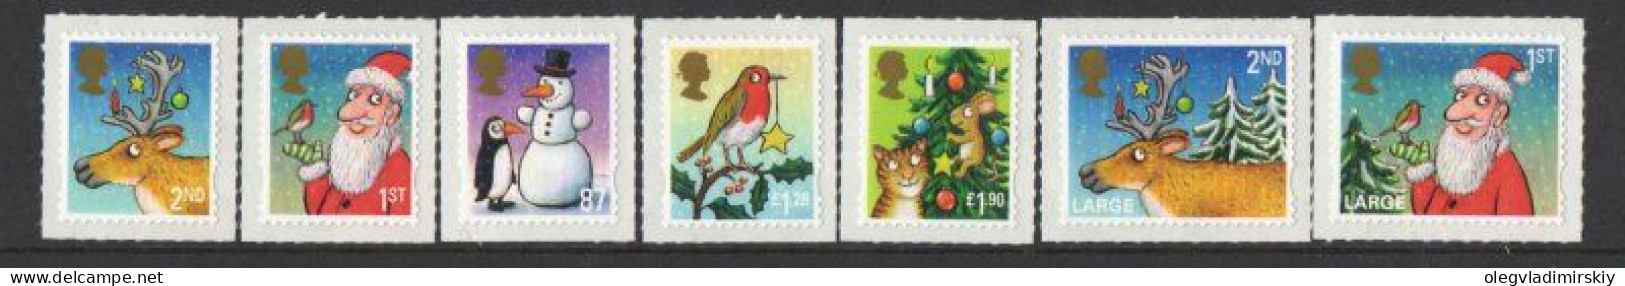 Great Britain United Kingdom 2012 Christmas Set Of 7 Self-adhesive Stamps MNH - Navidad